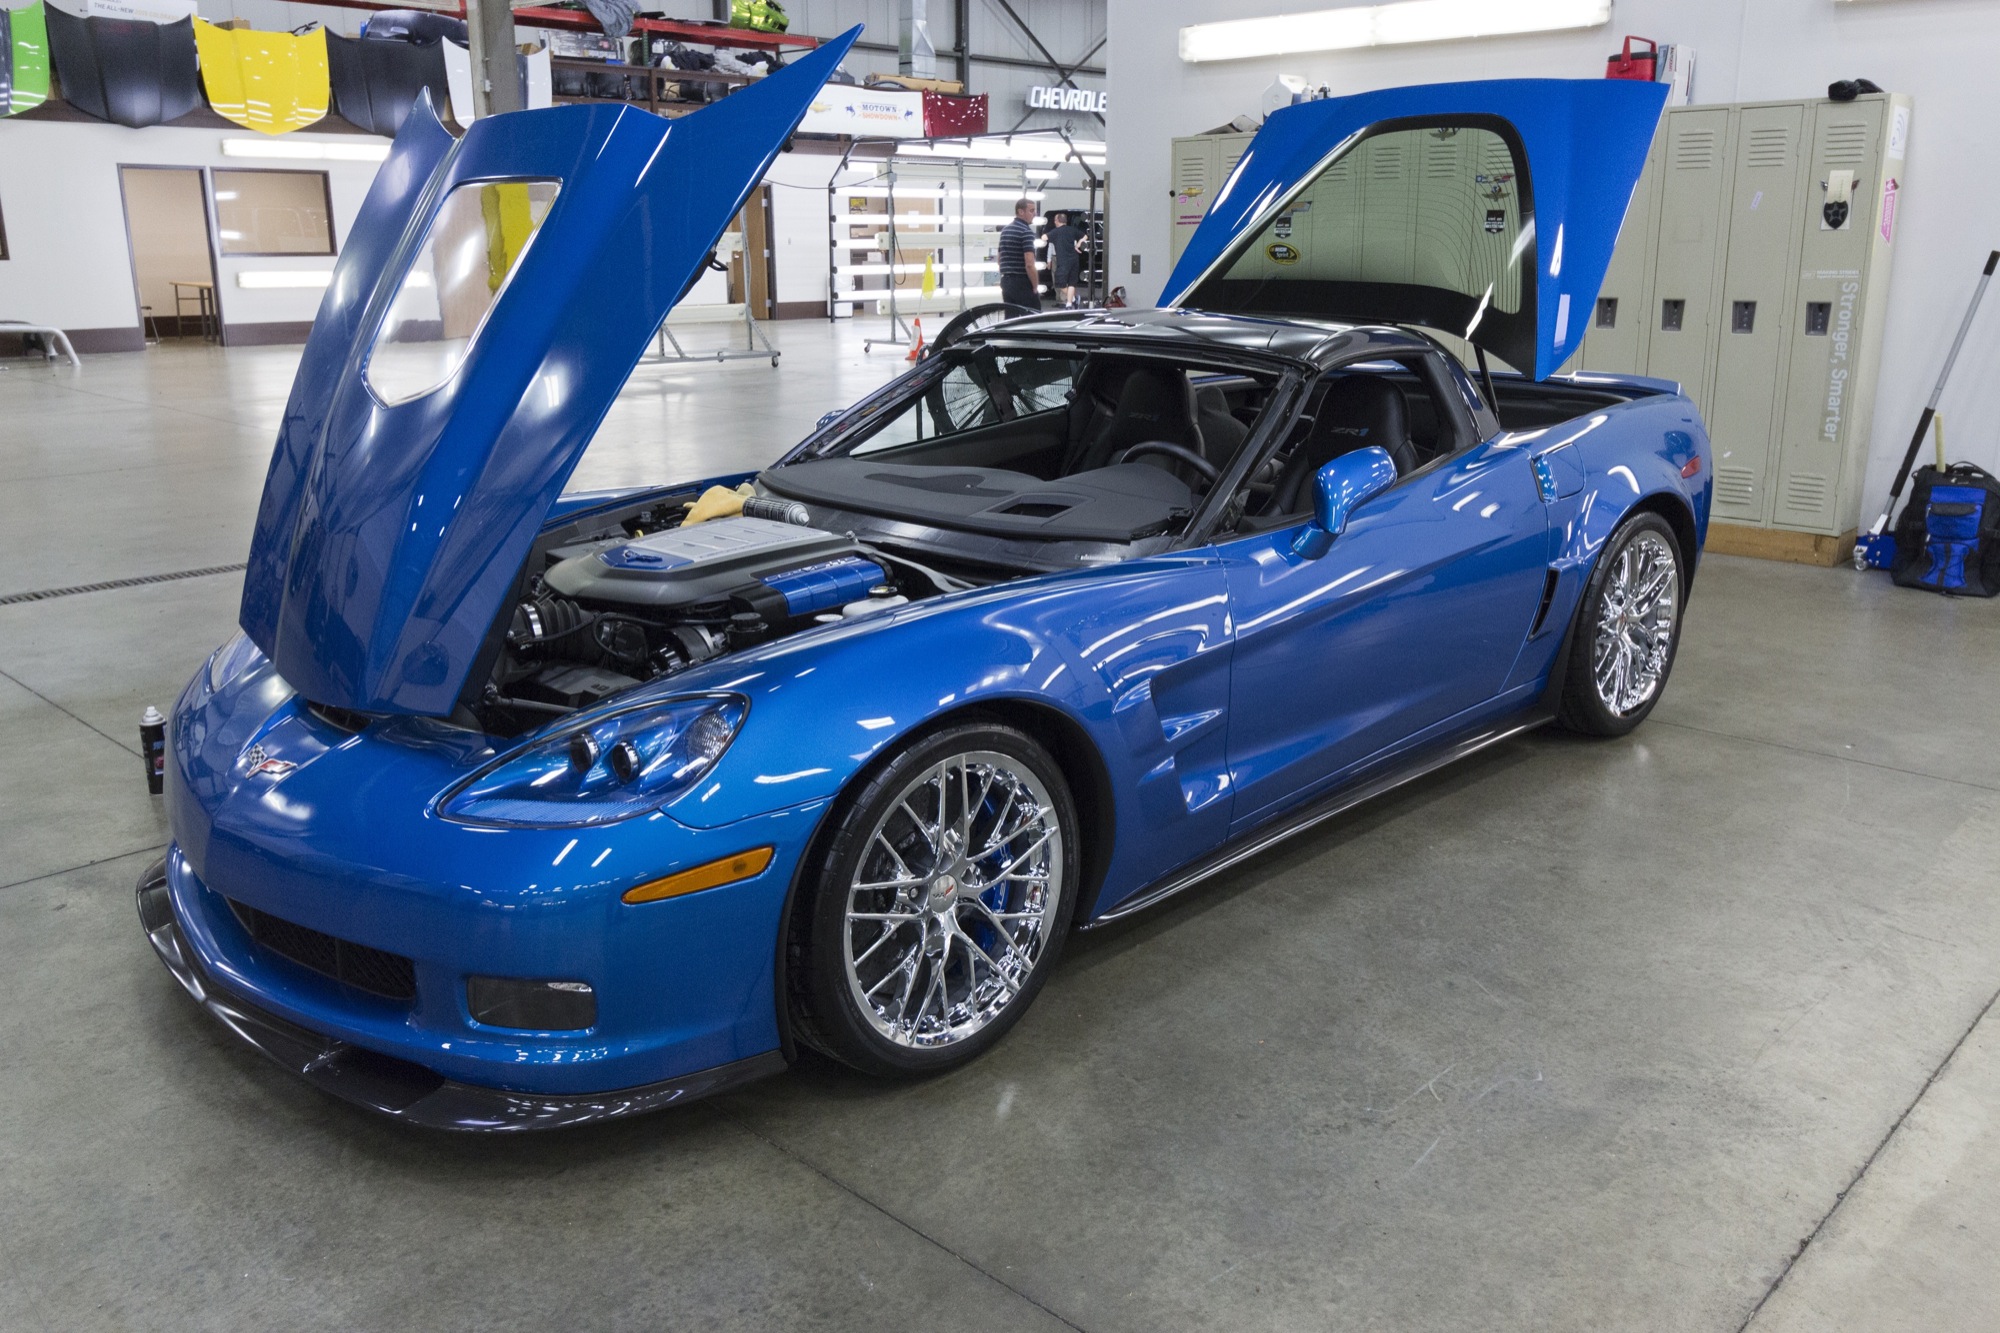 Sinkhole 2009 Chevrolet Corvette ZR1 "Blue Devil" Prototype Restored ...